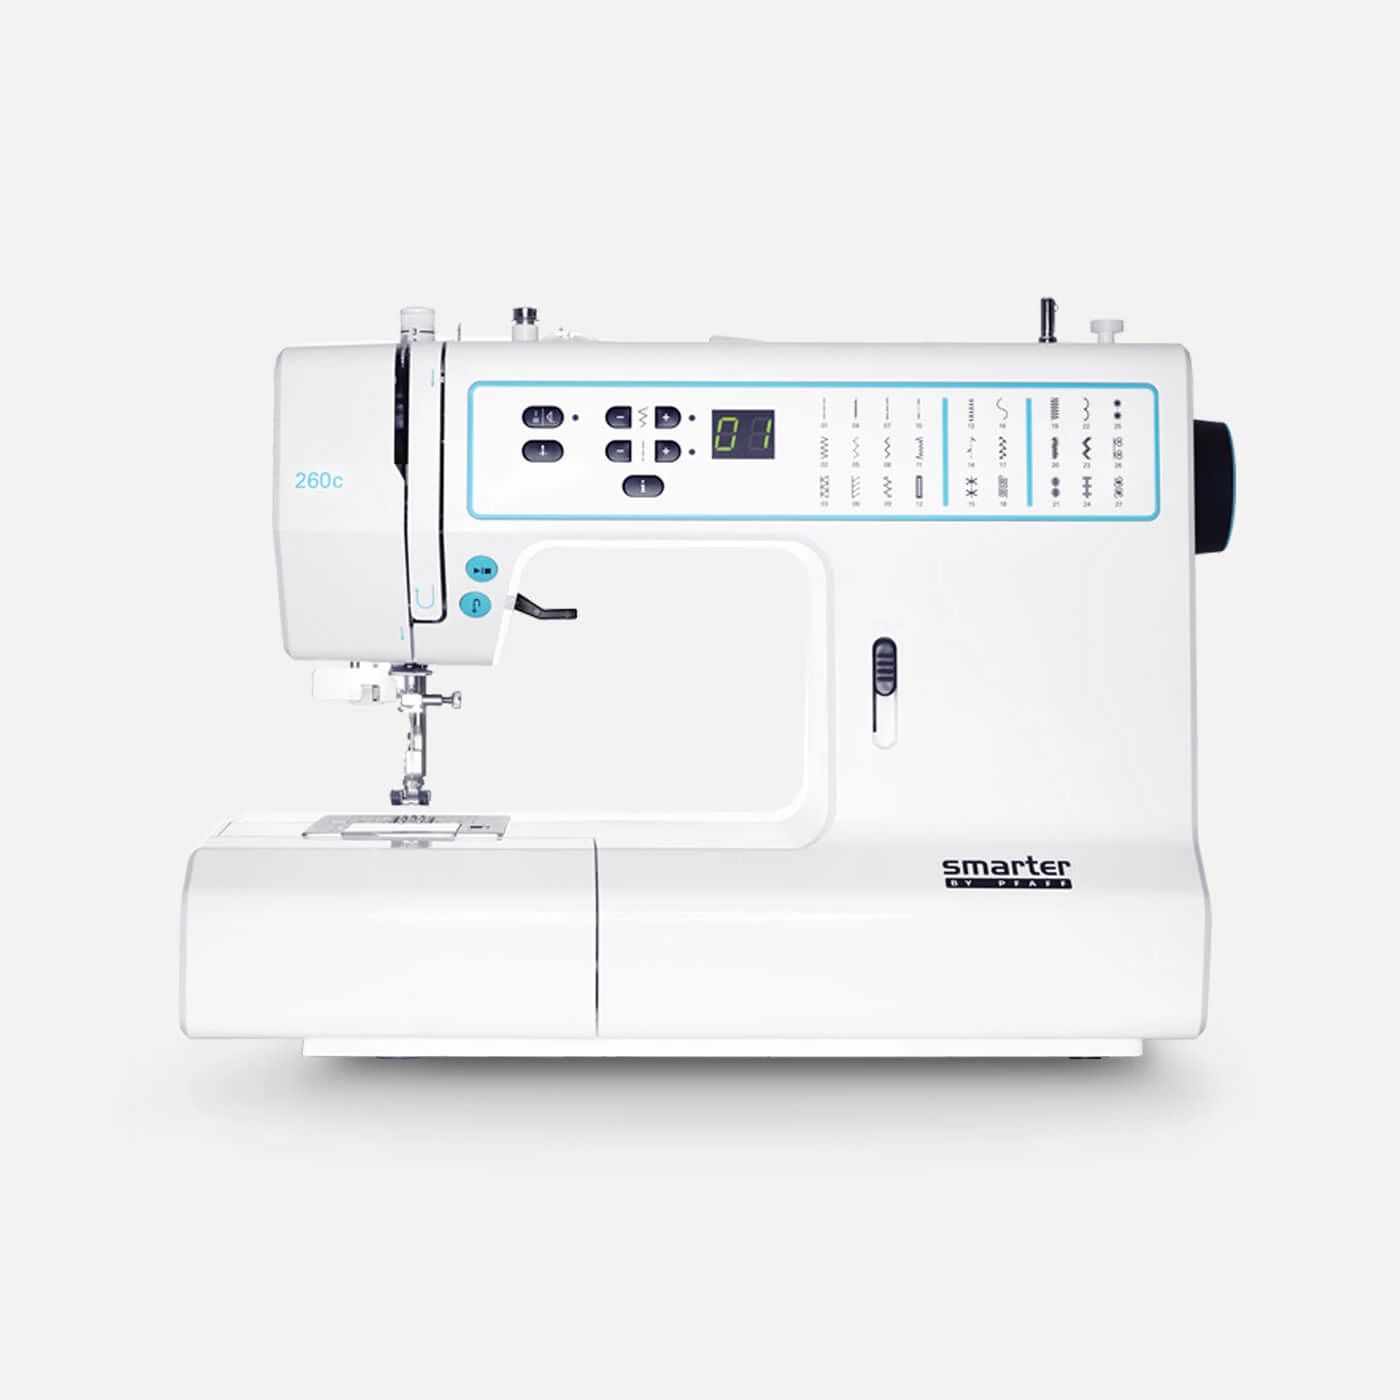 SMARTER BY PFAFF™ 260c Sewing Machine